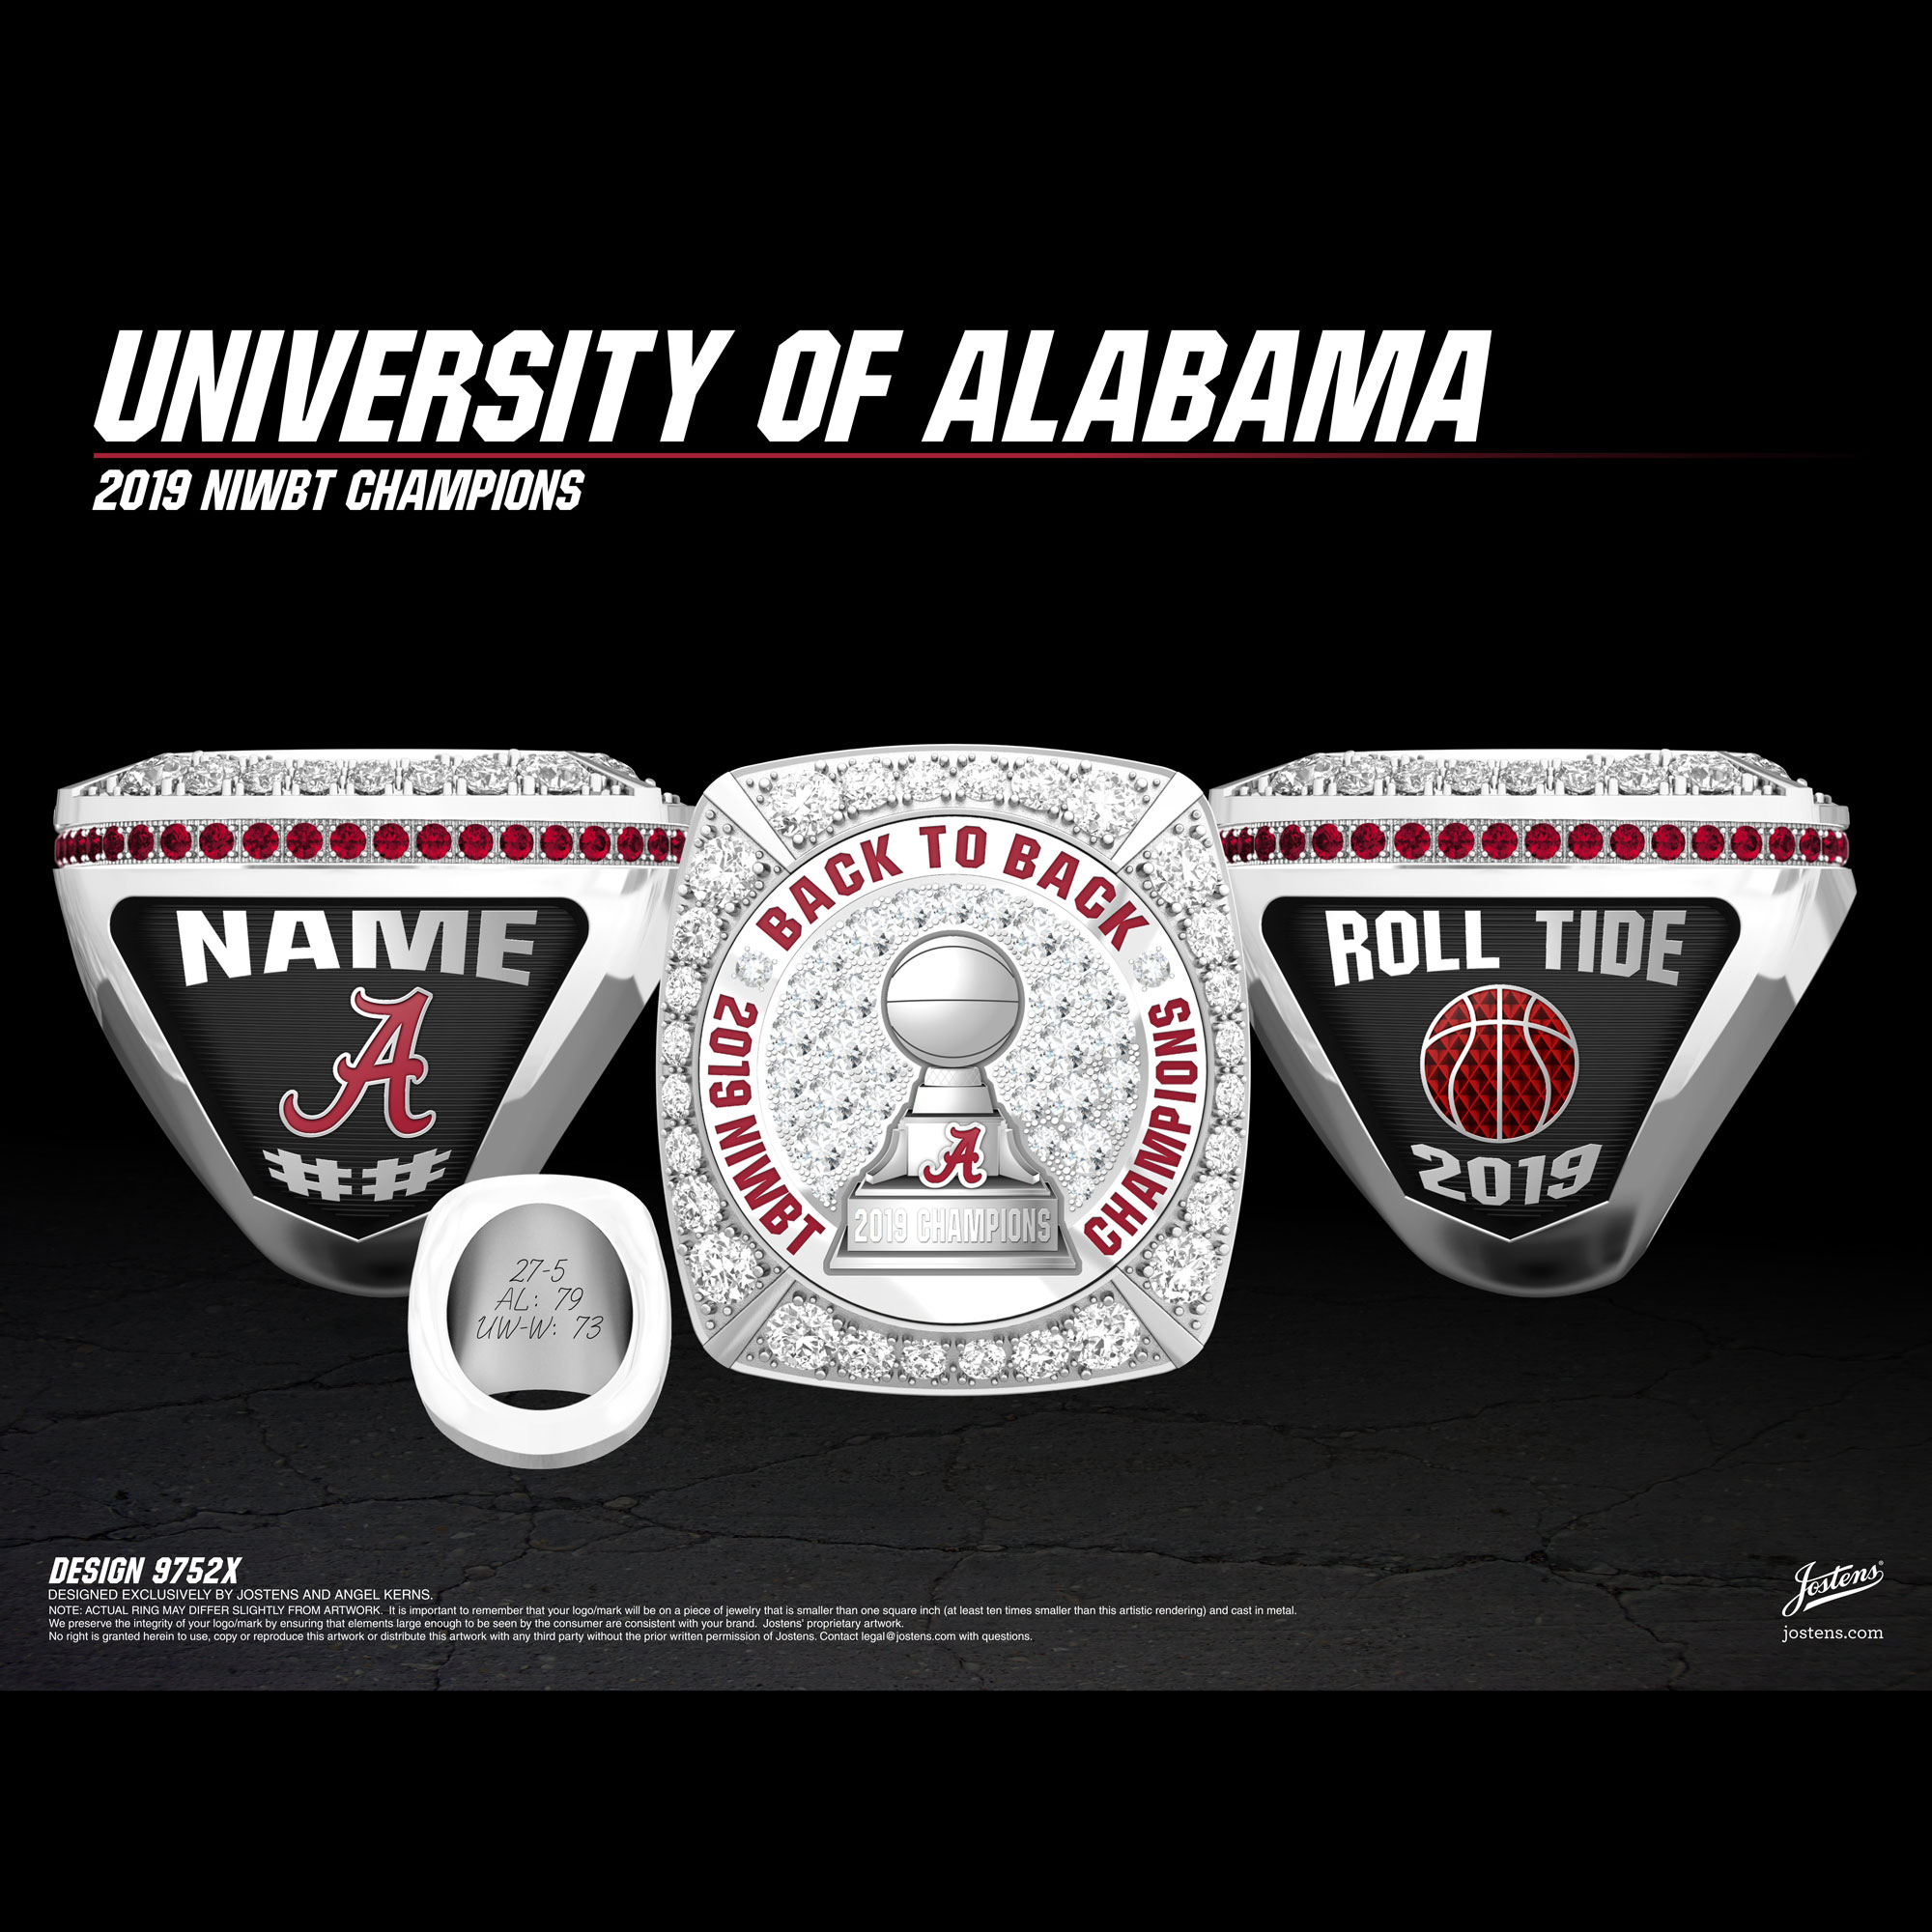 University of Alabama Men's Basketball 2019 NIWBT Championship Ring